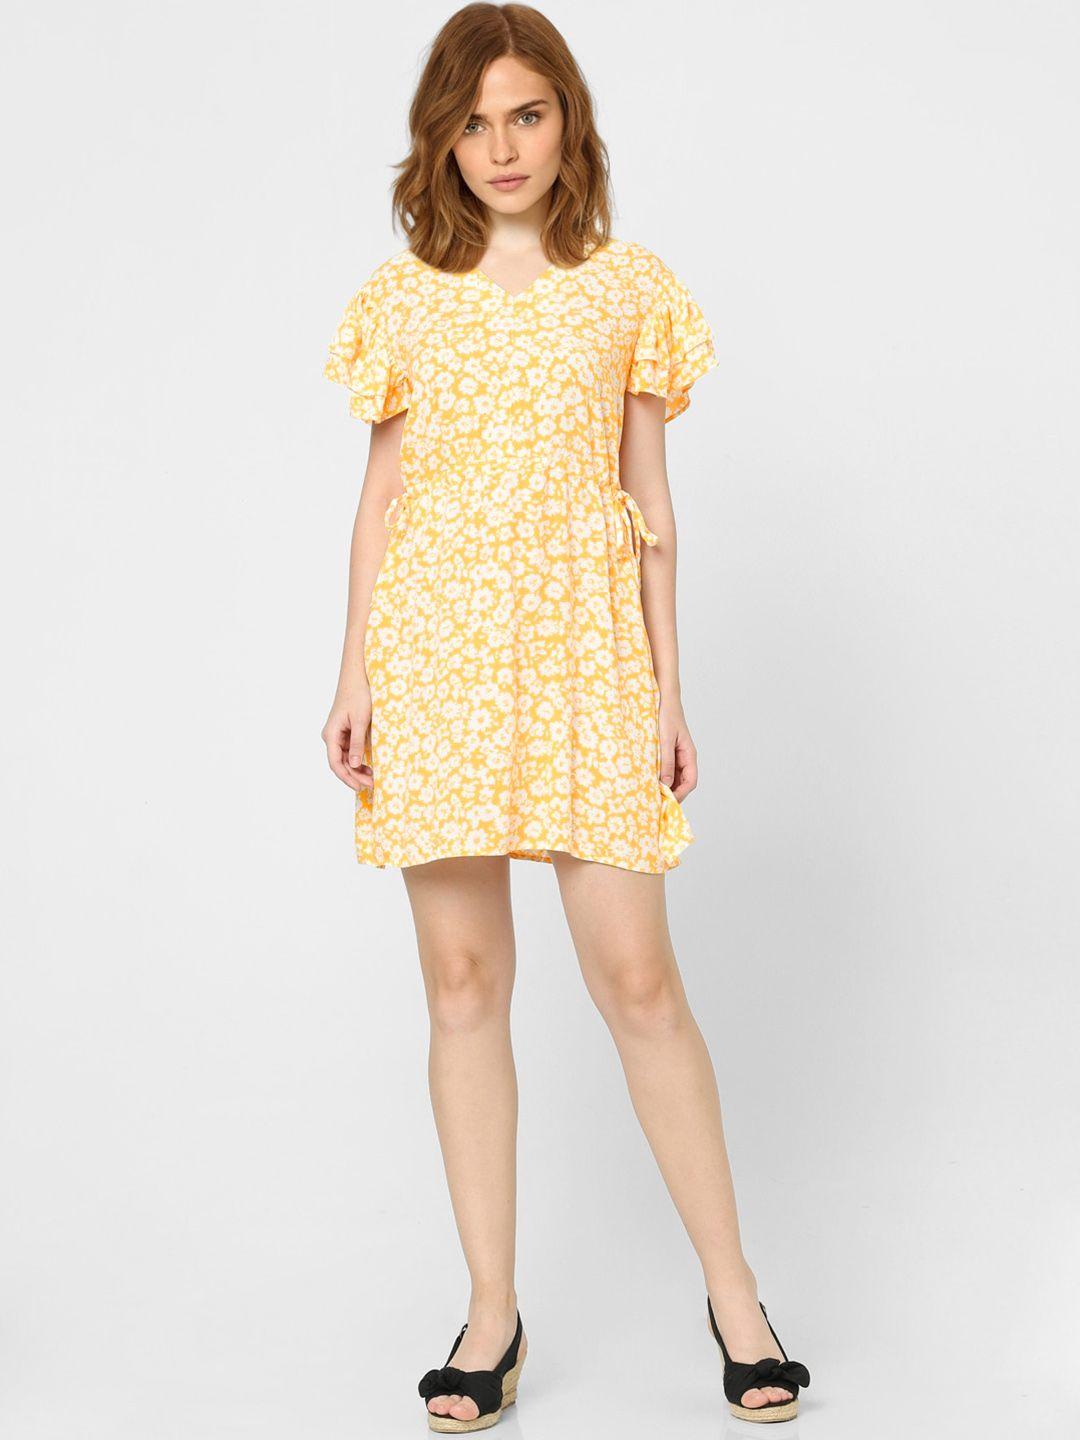 vero moda yellow floral printed a-line dress